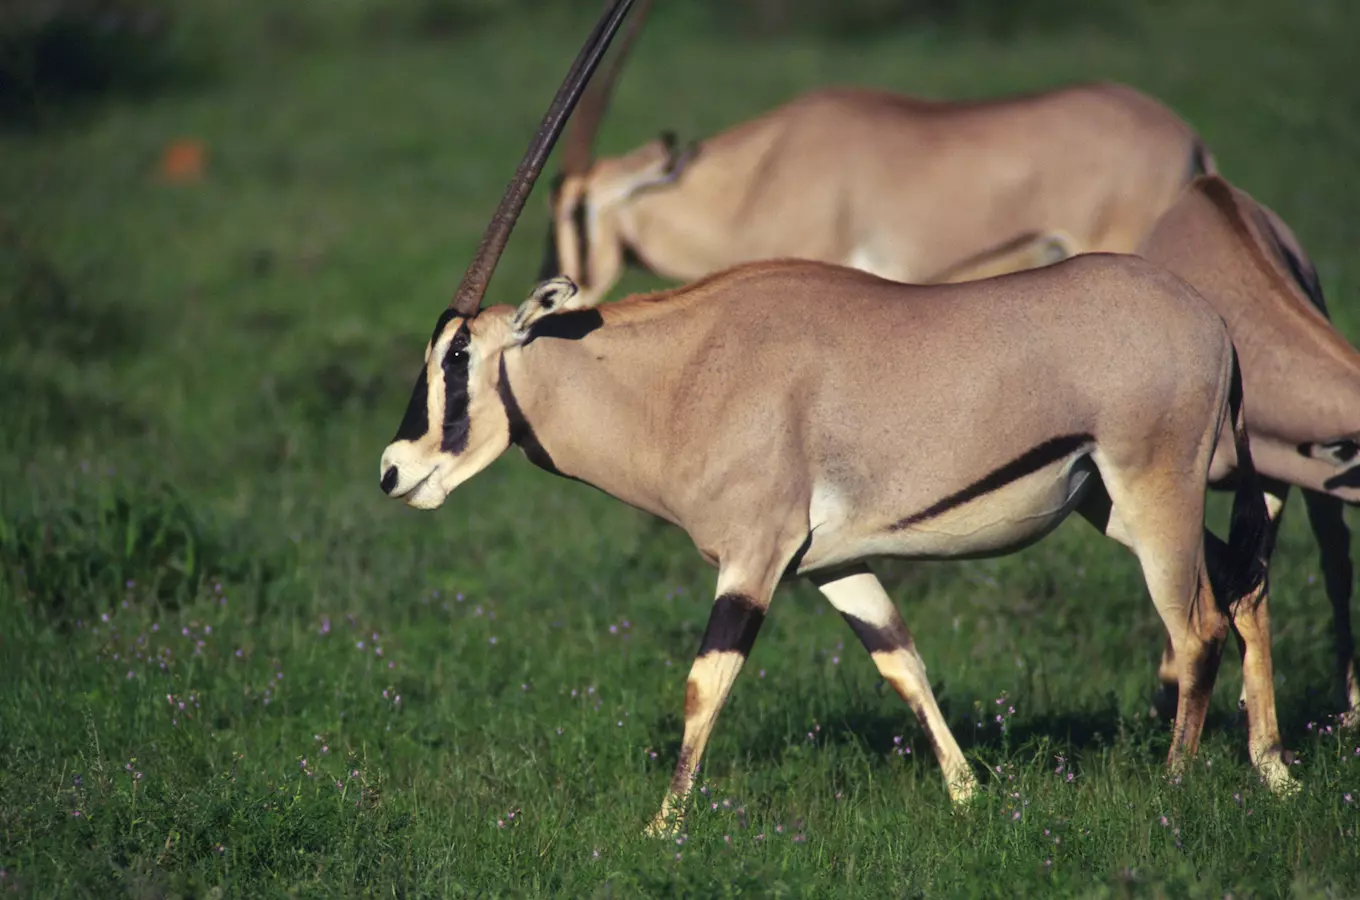 Olomoucká zoo otevřela africké safari, zve na oryxy a žirafy